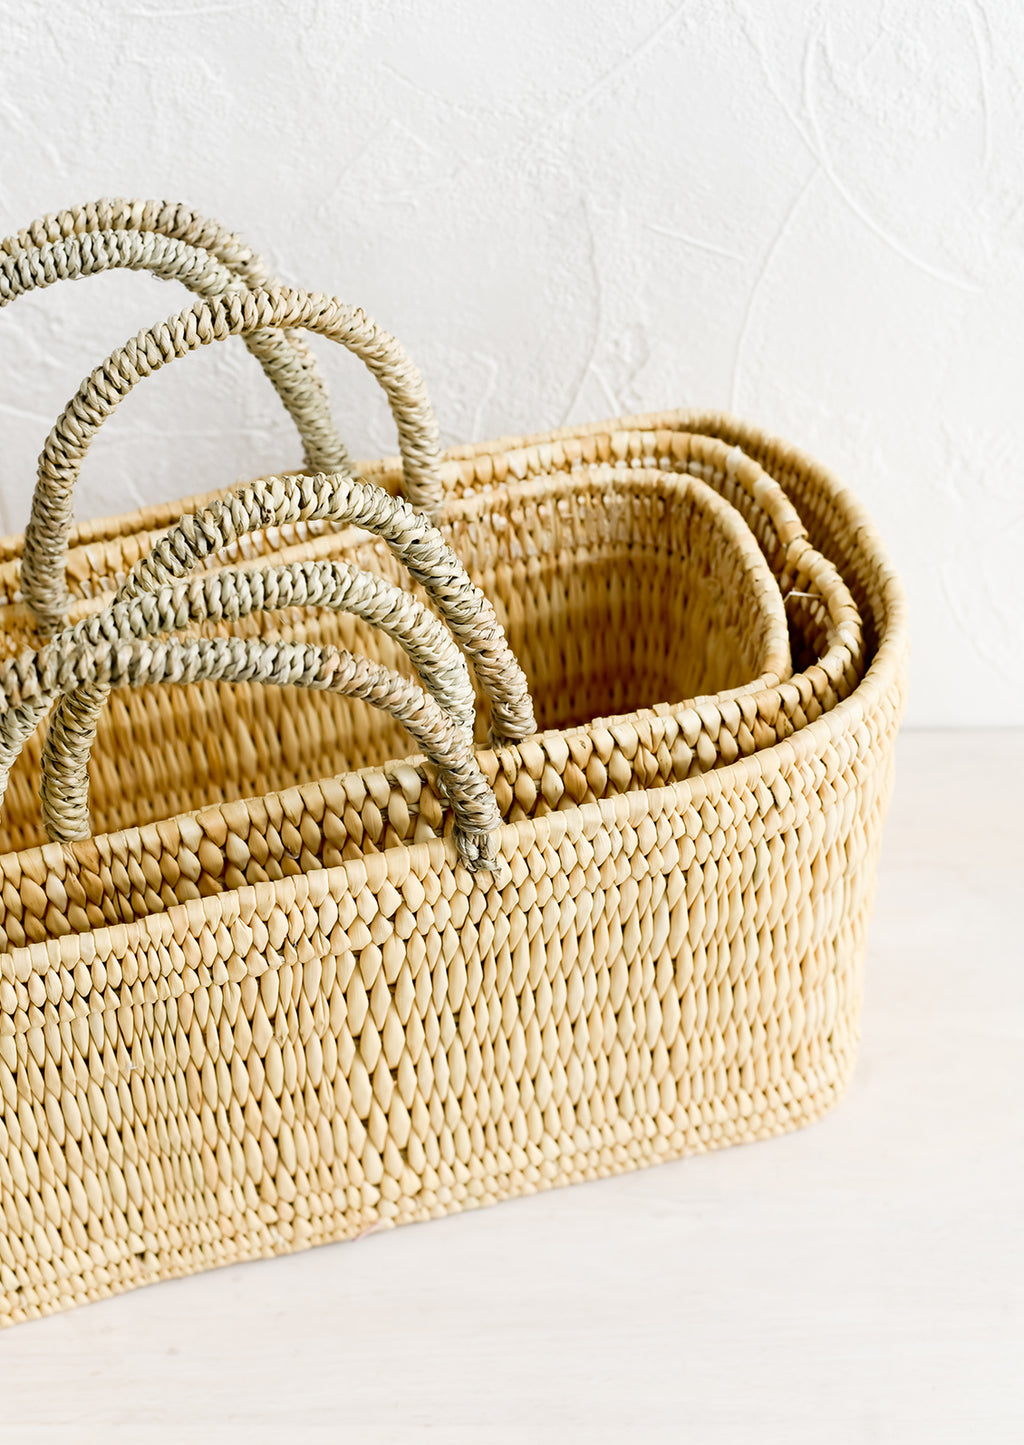 2: Nesting rectangular storage baskets with top handles.